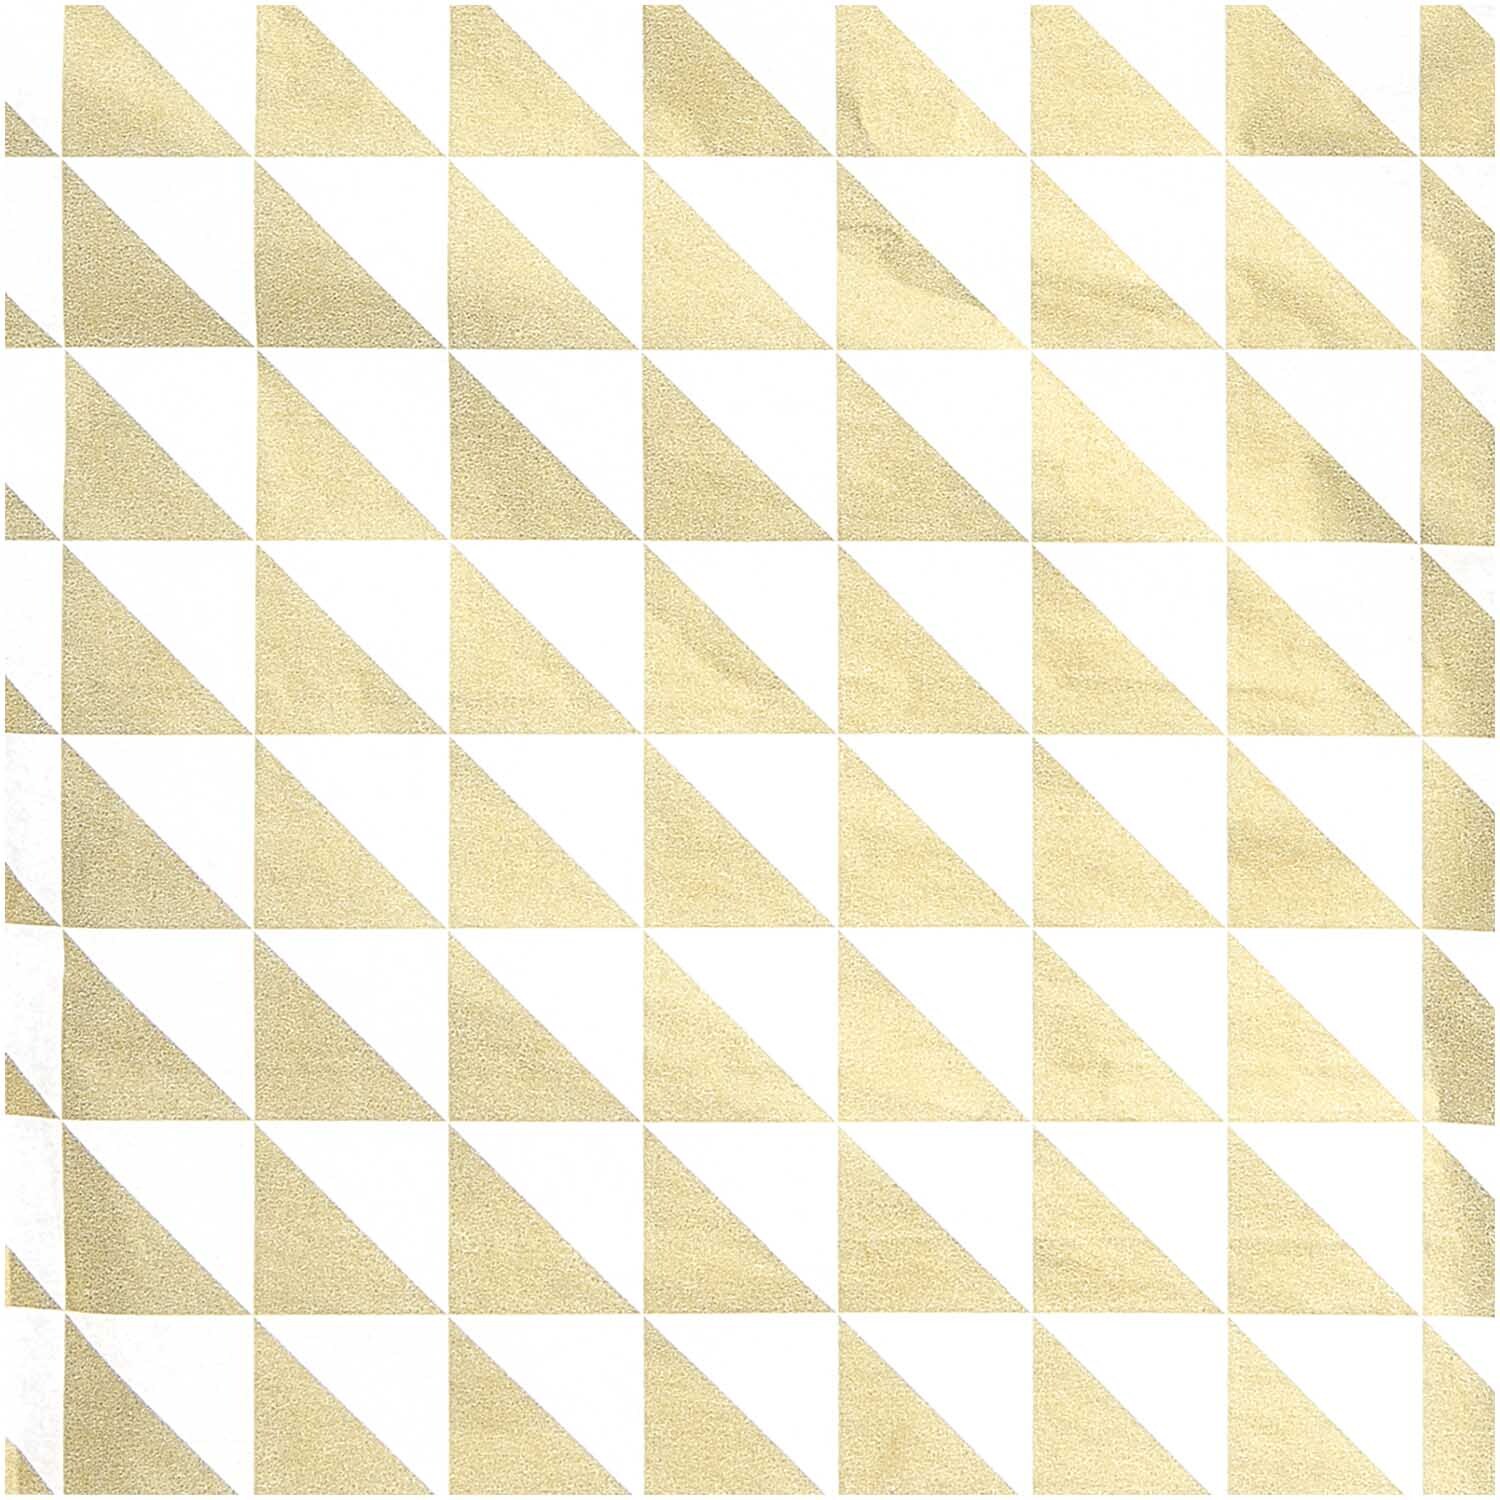 Paper Poetry Seidenpapier Dreiecke gold-weiß 50x70cm